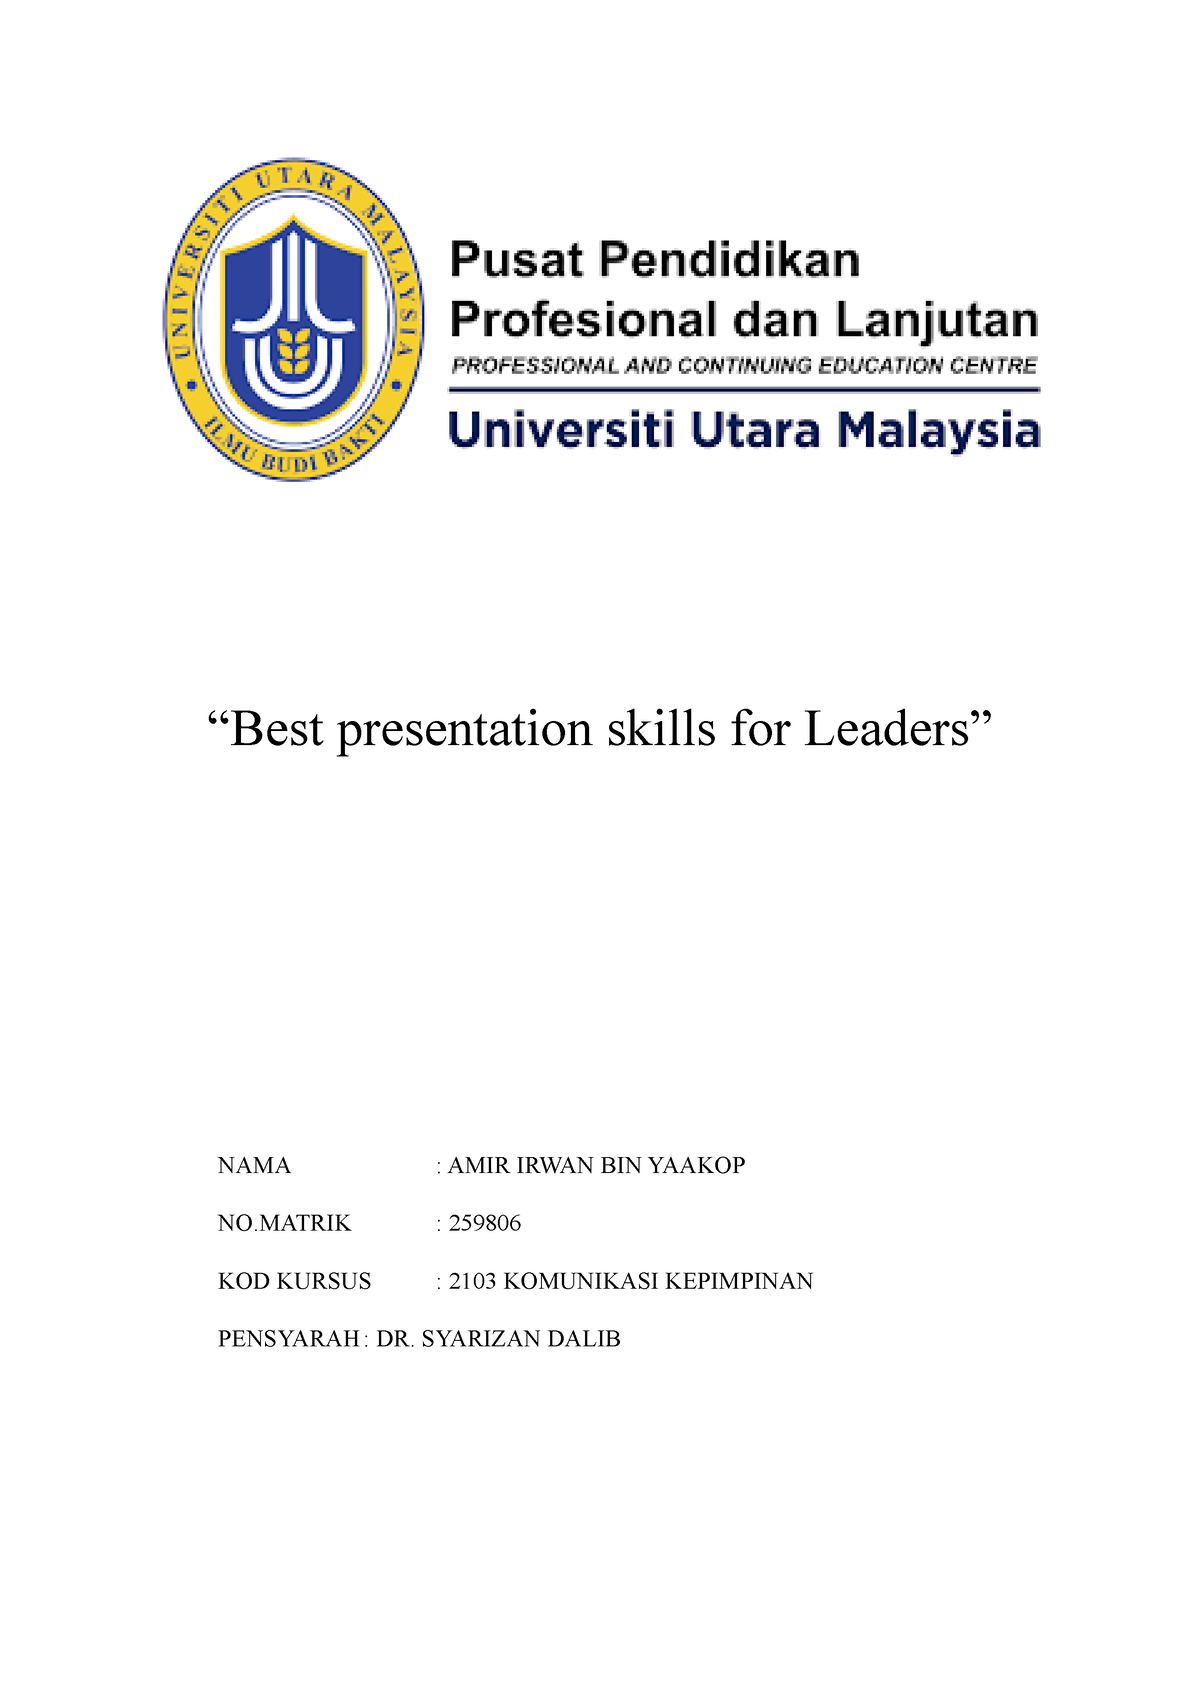 Leadership Assignment Individu - “Best presentation skills for Leaders